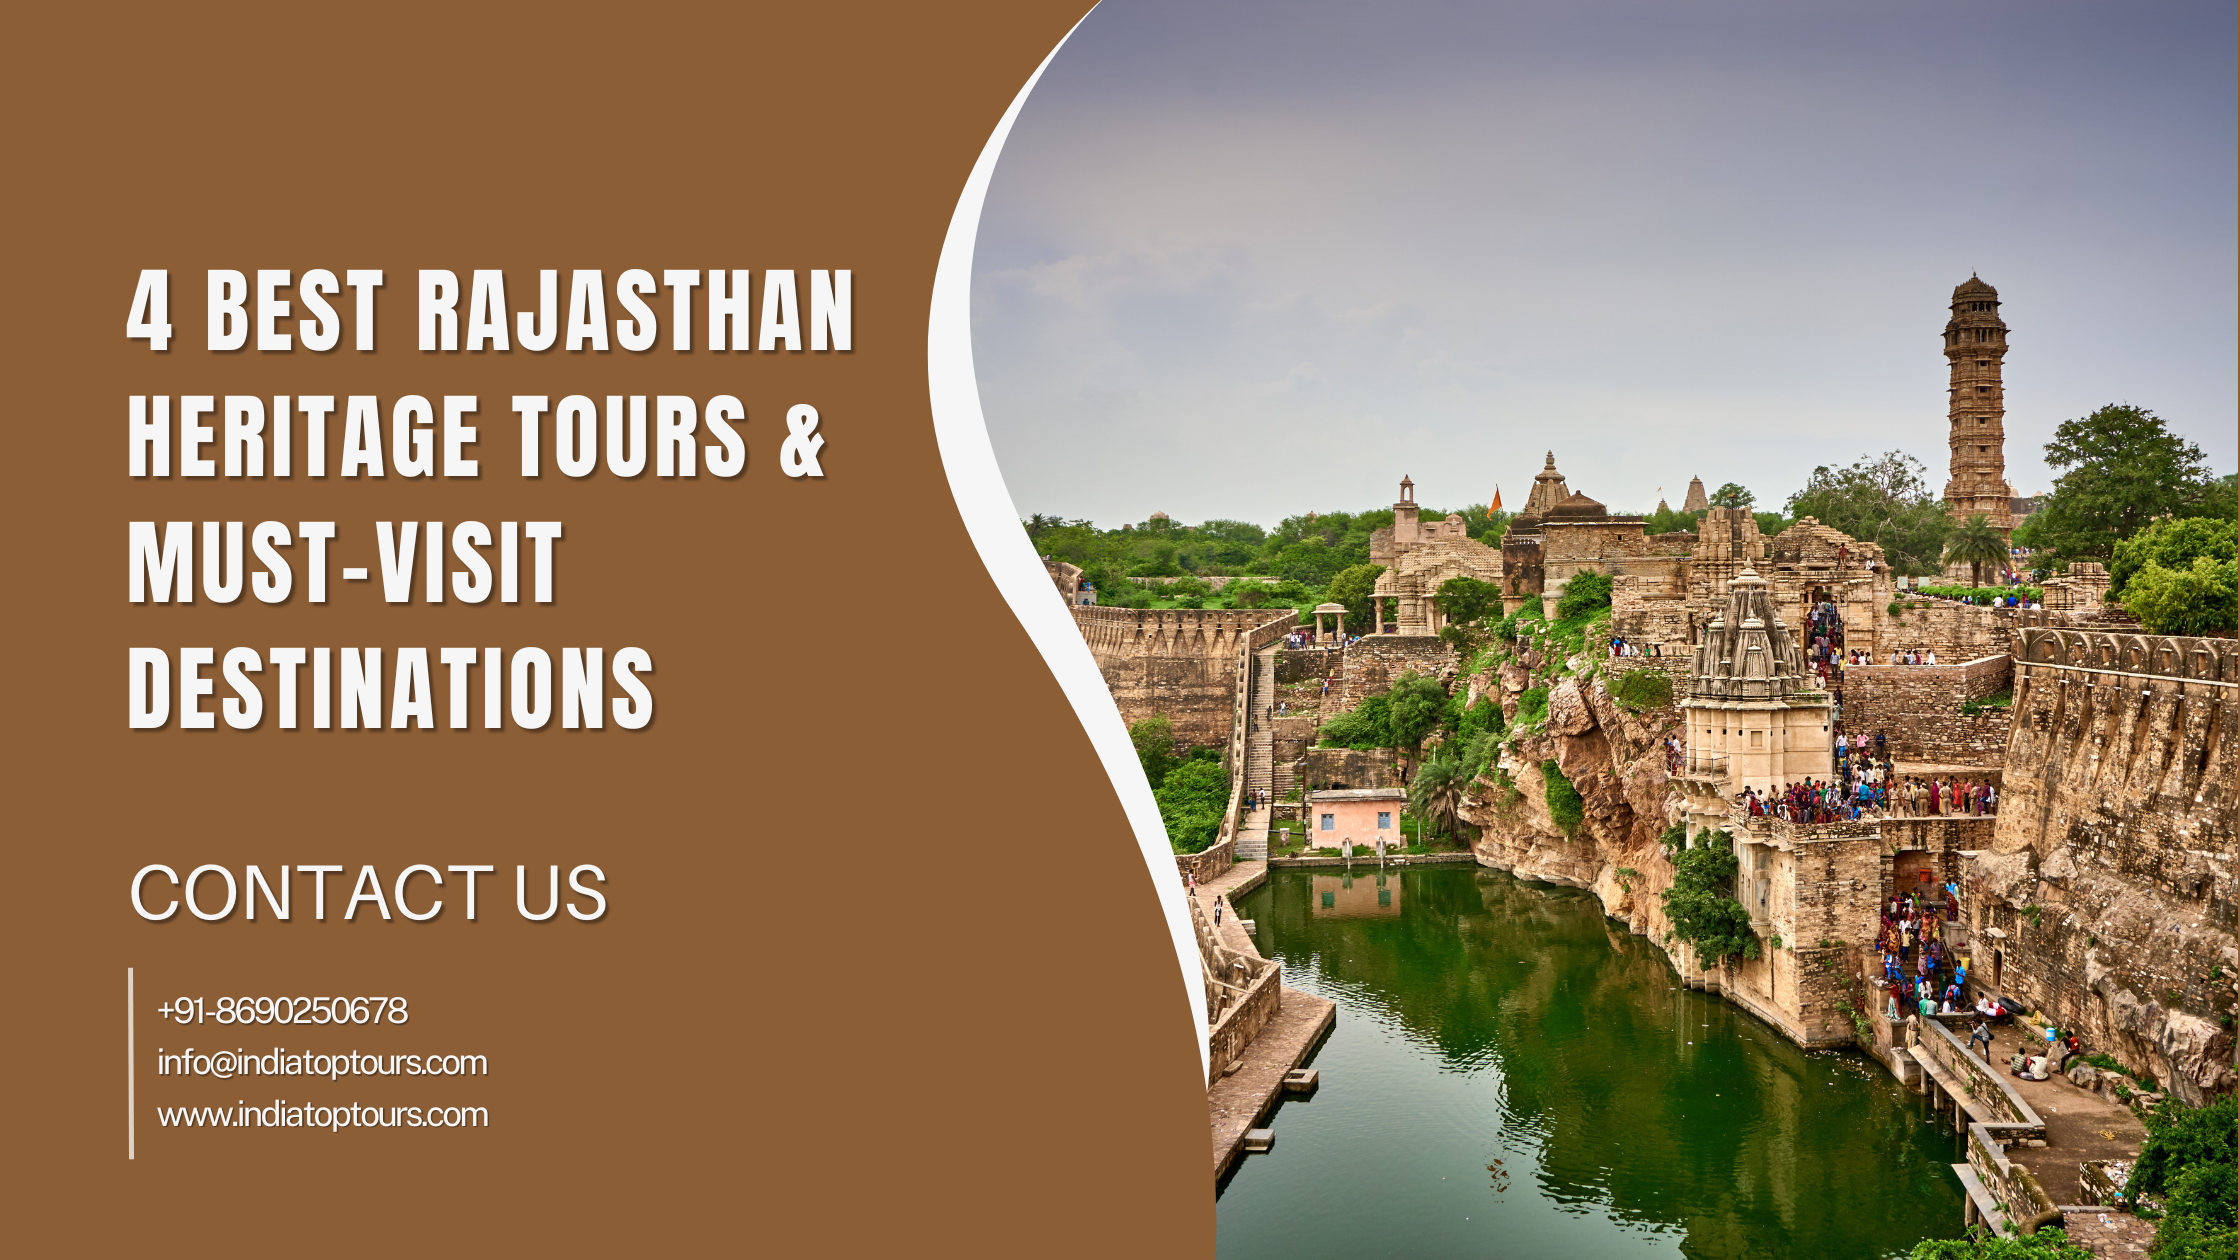 4 Best Rajasthan Heritage Tours & Must-Visit Destinations